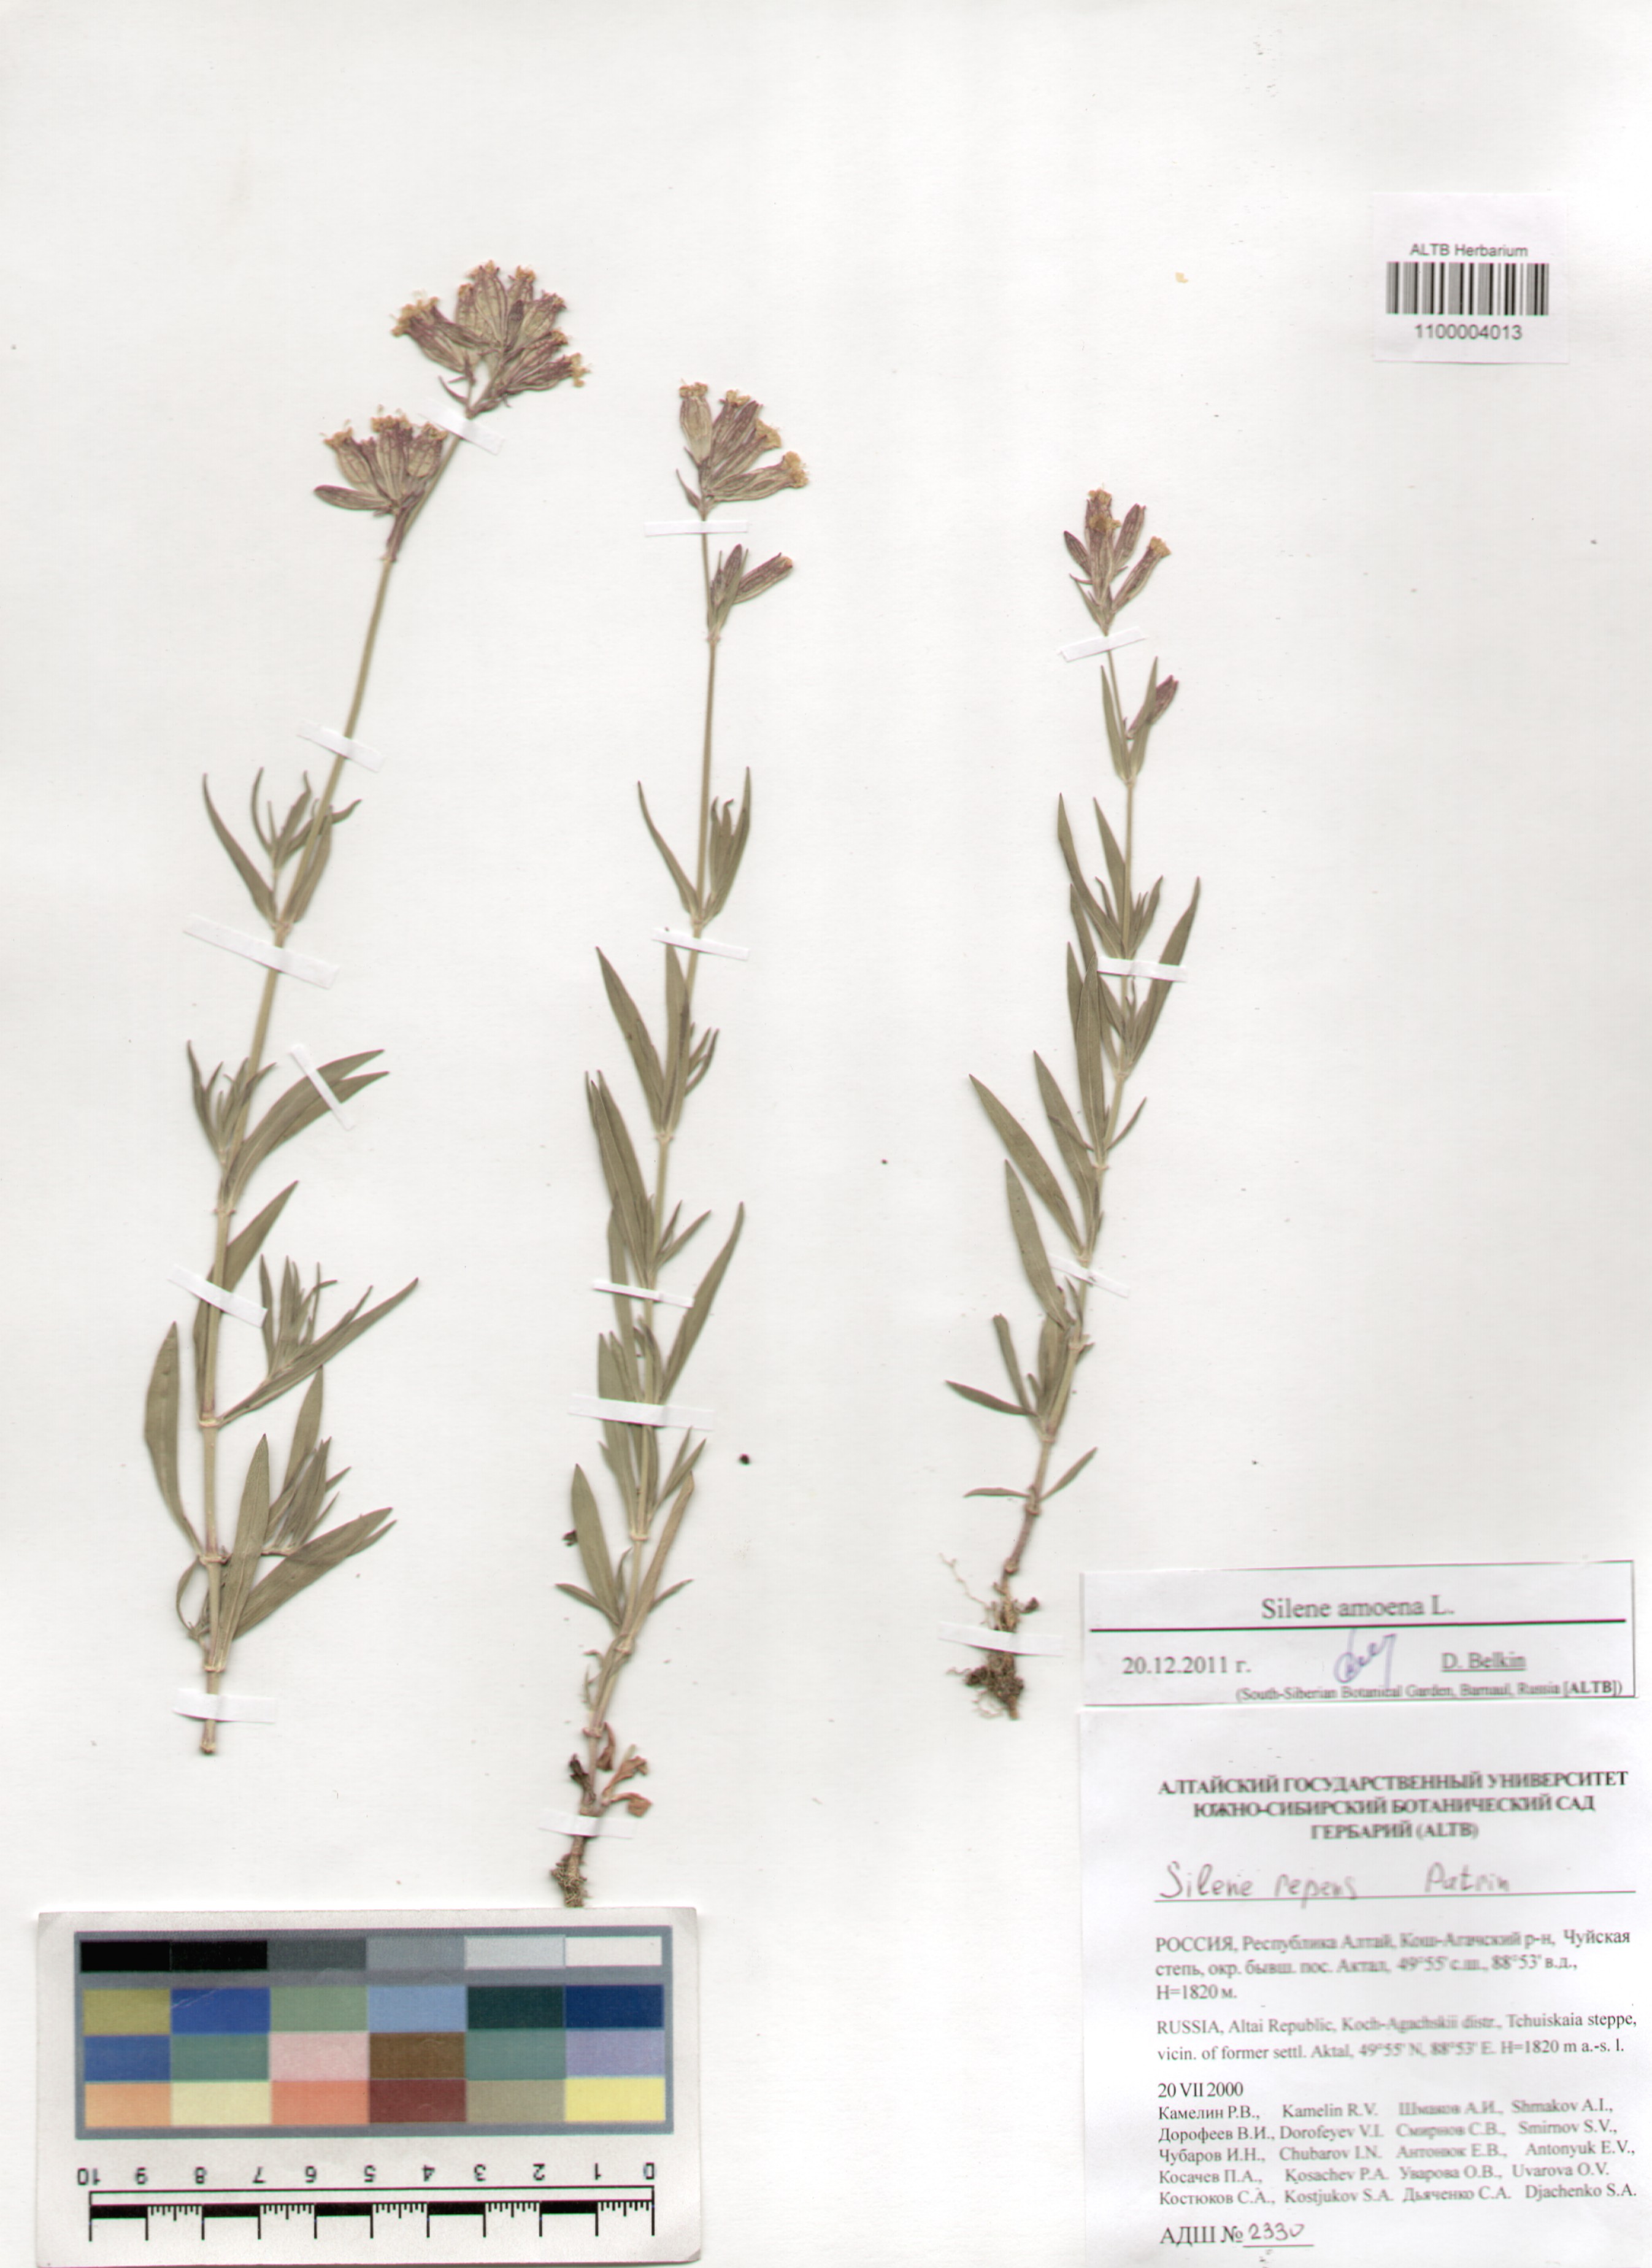 Caryophyllaceae,Silene amoena L.